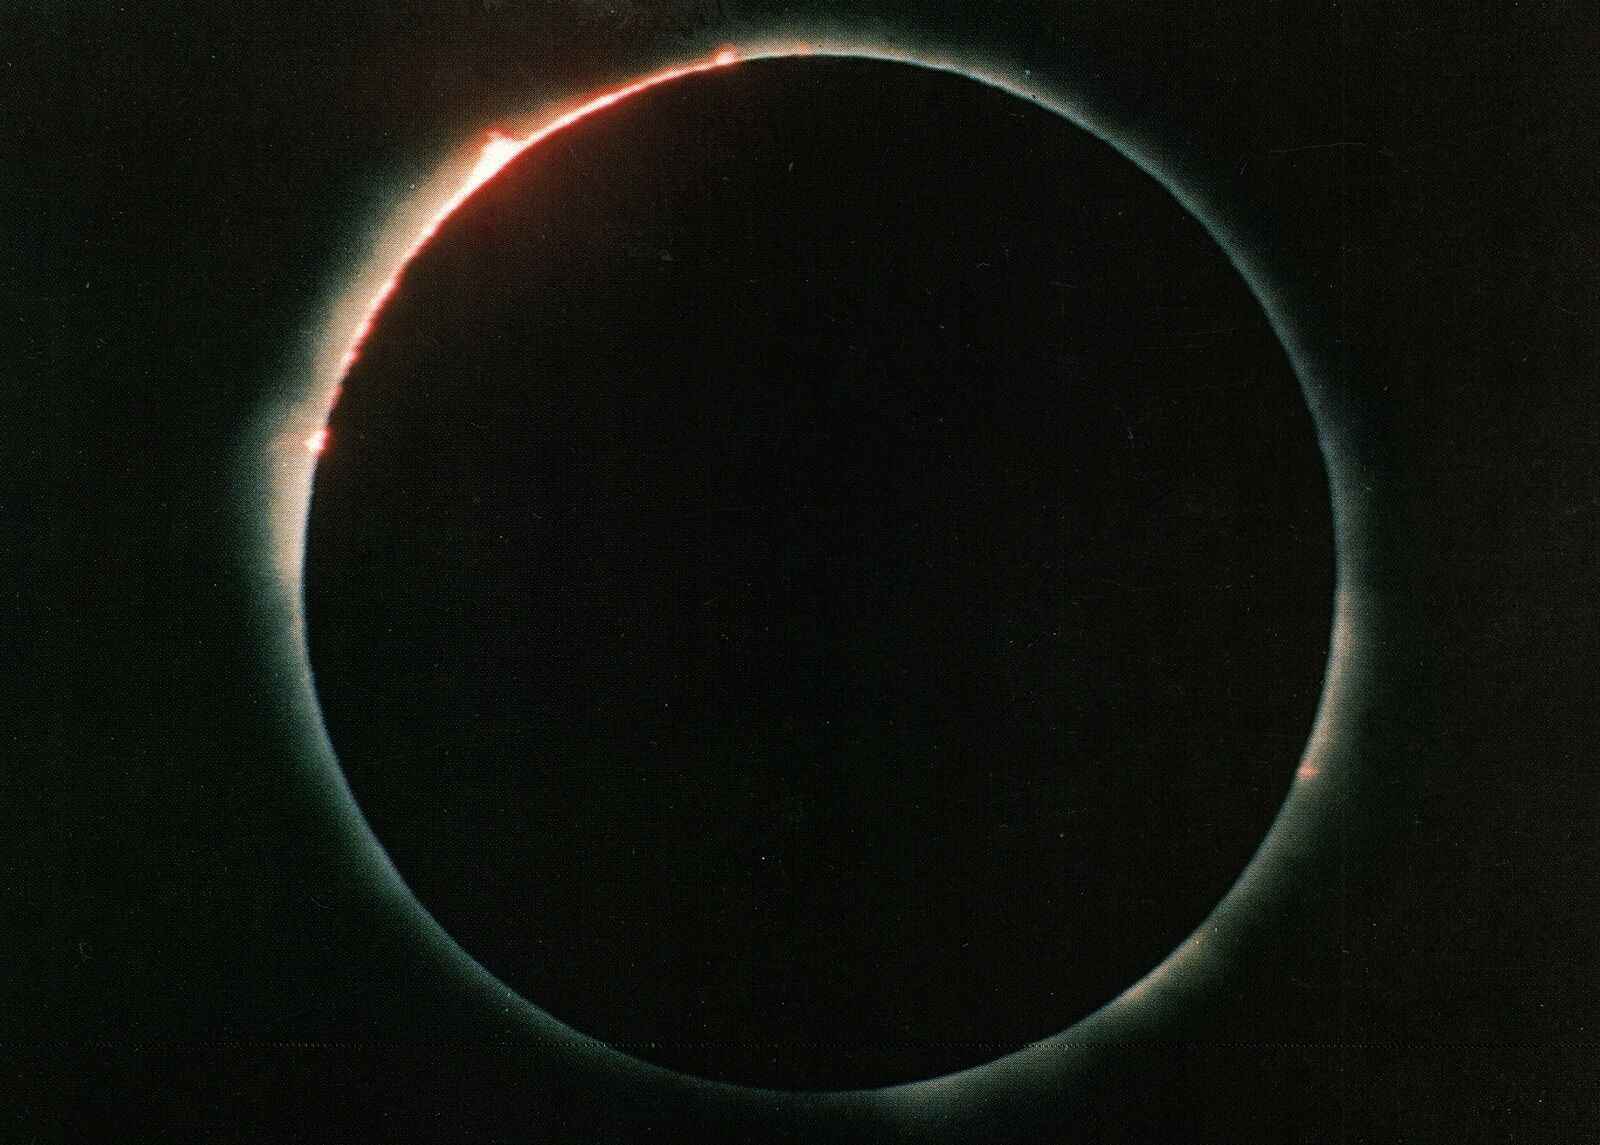 VINTAGE POSTCARD IMAGE OF THE SUN TAKEN BY THE SOLAR TELESCOPE OF SKYLAB